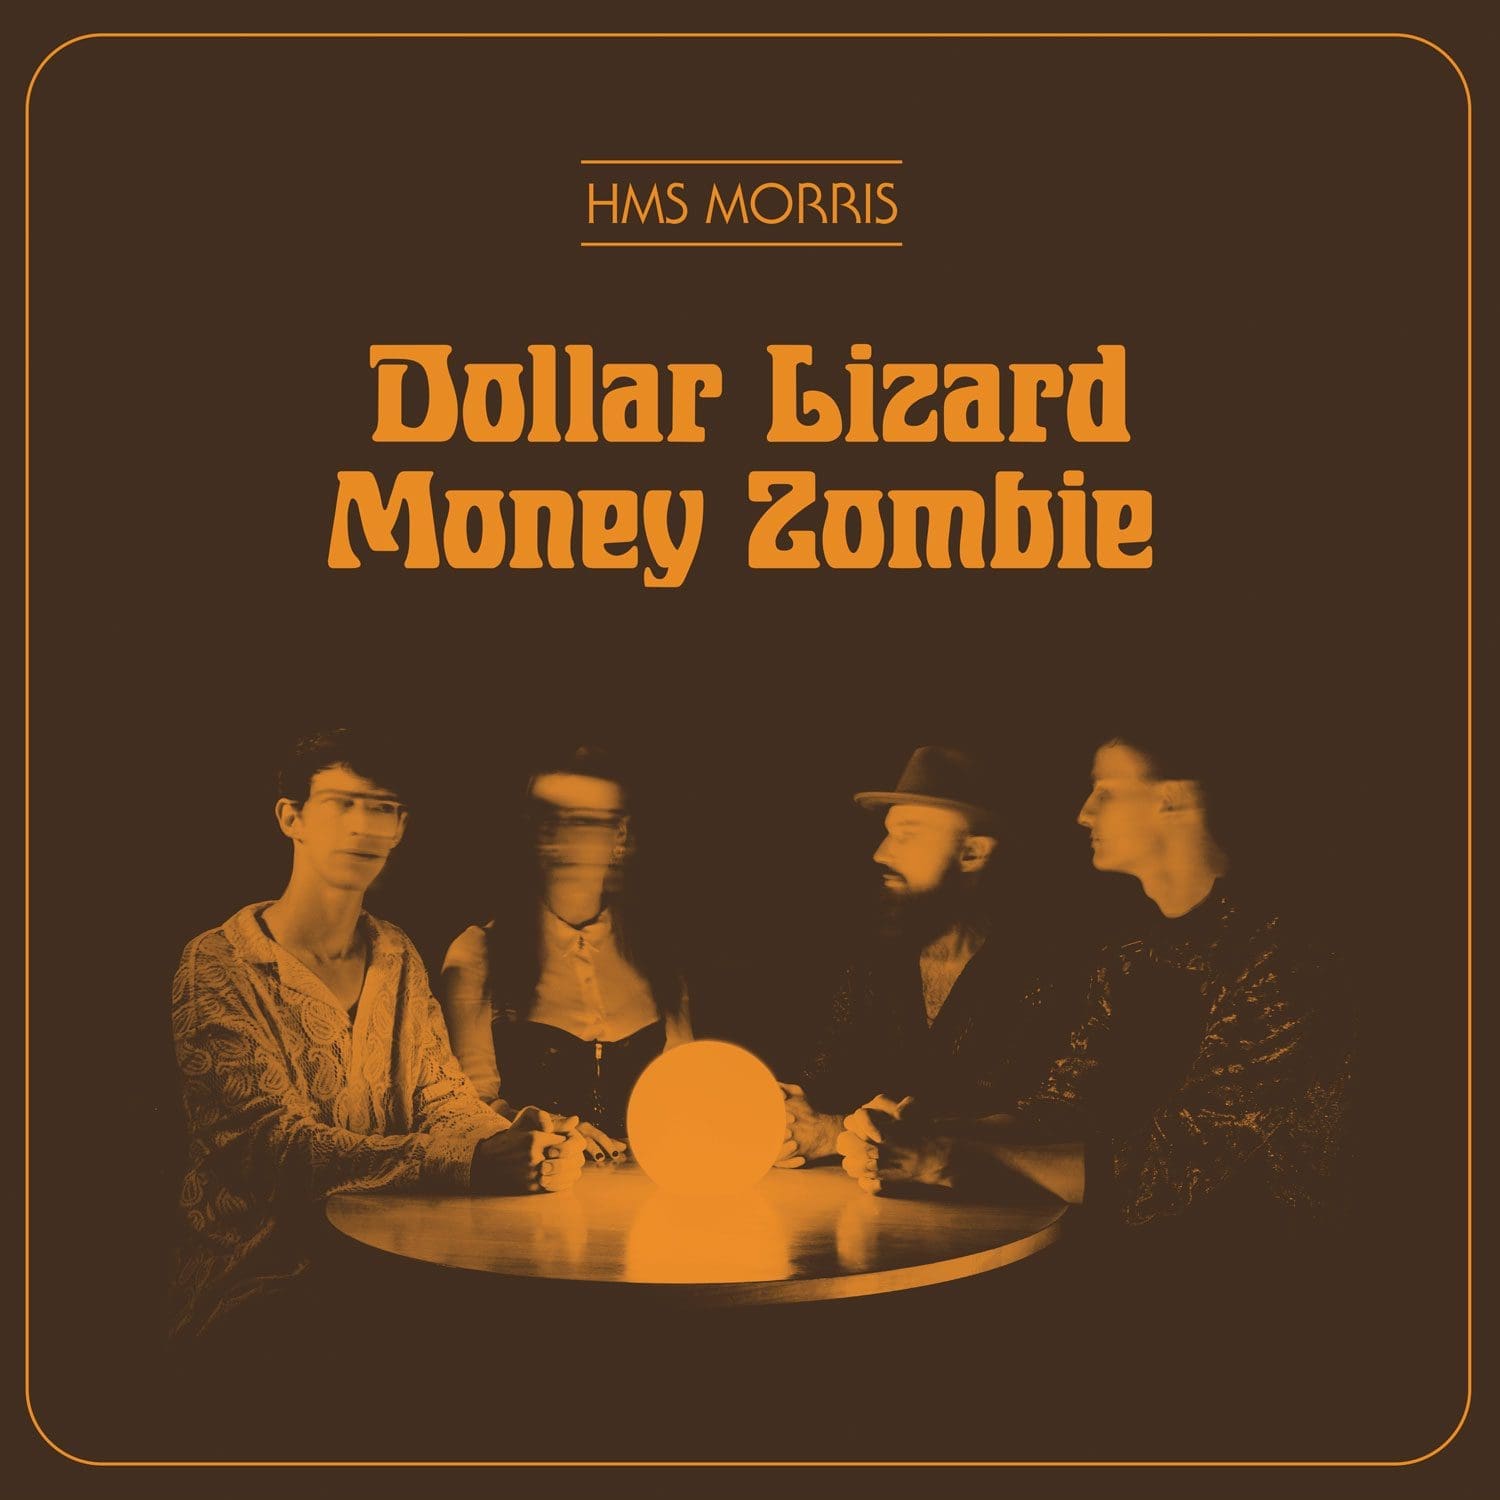 HMS Morris – Dollar Lizard Money Zombie